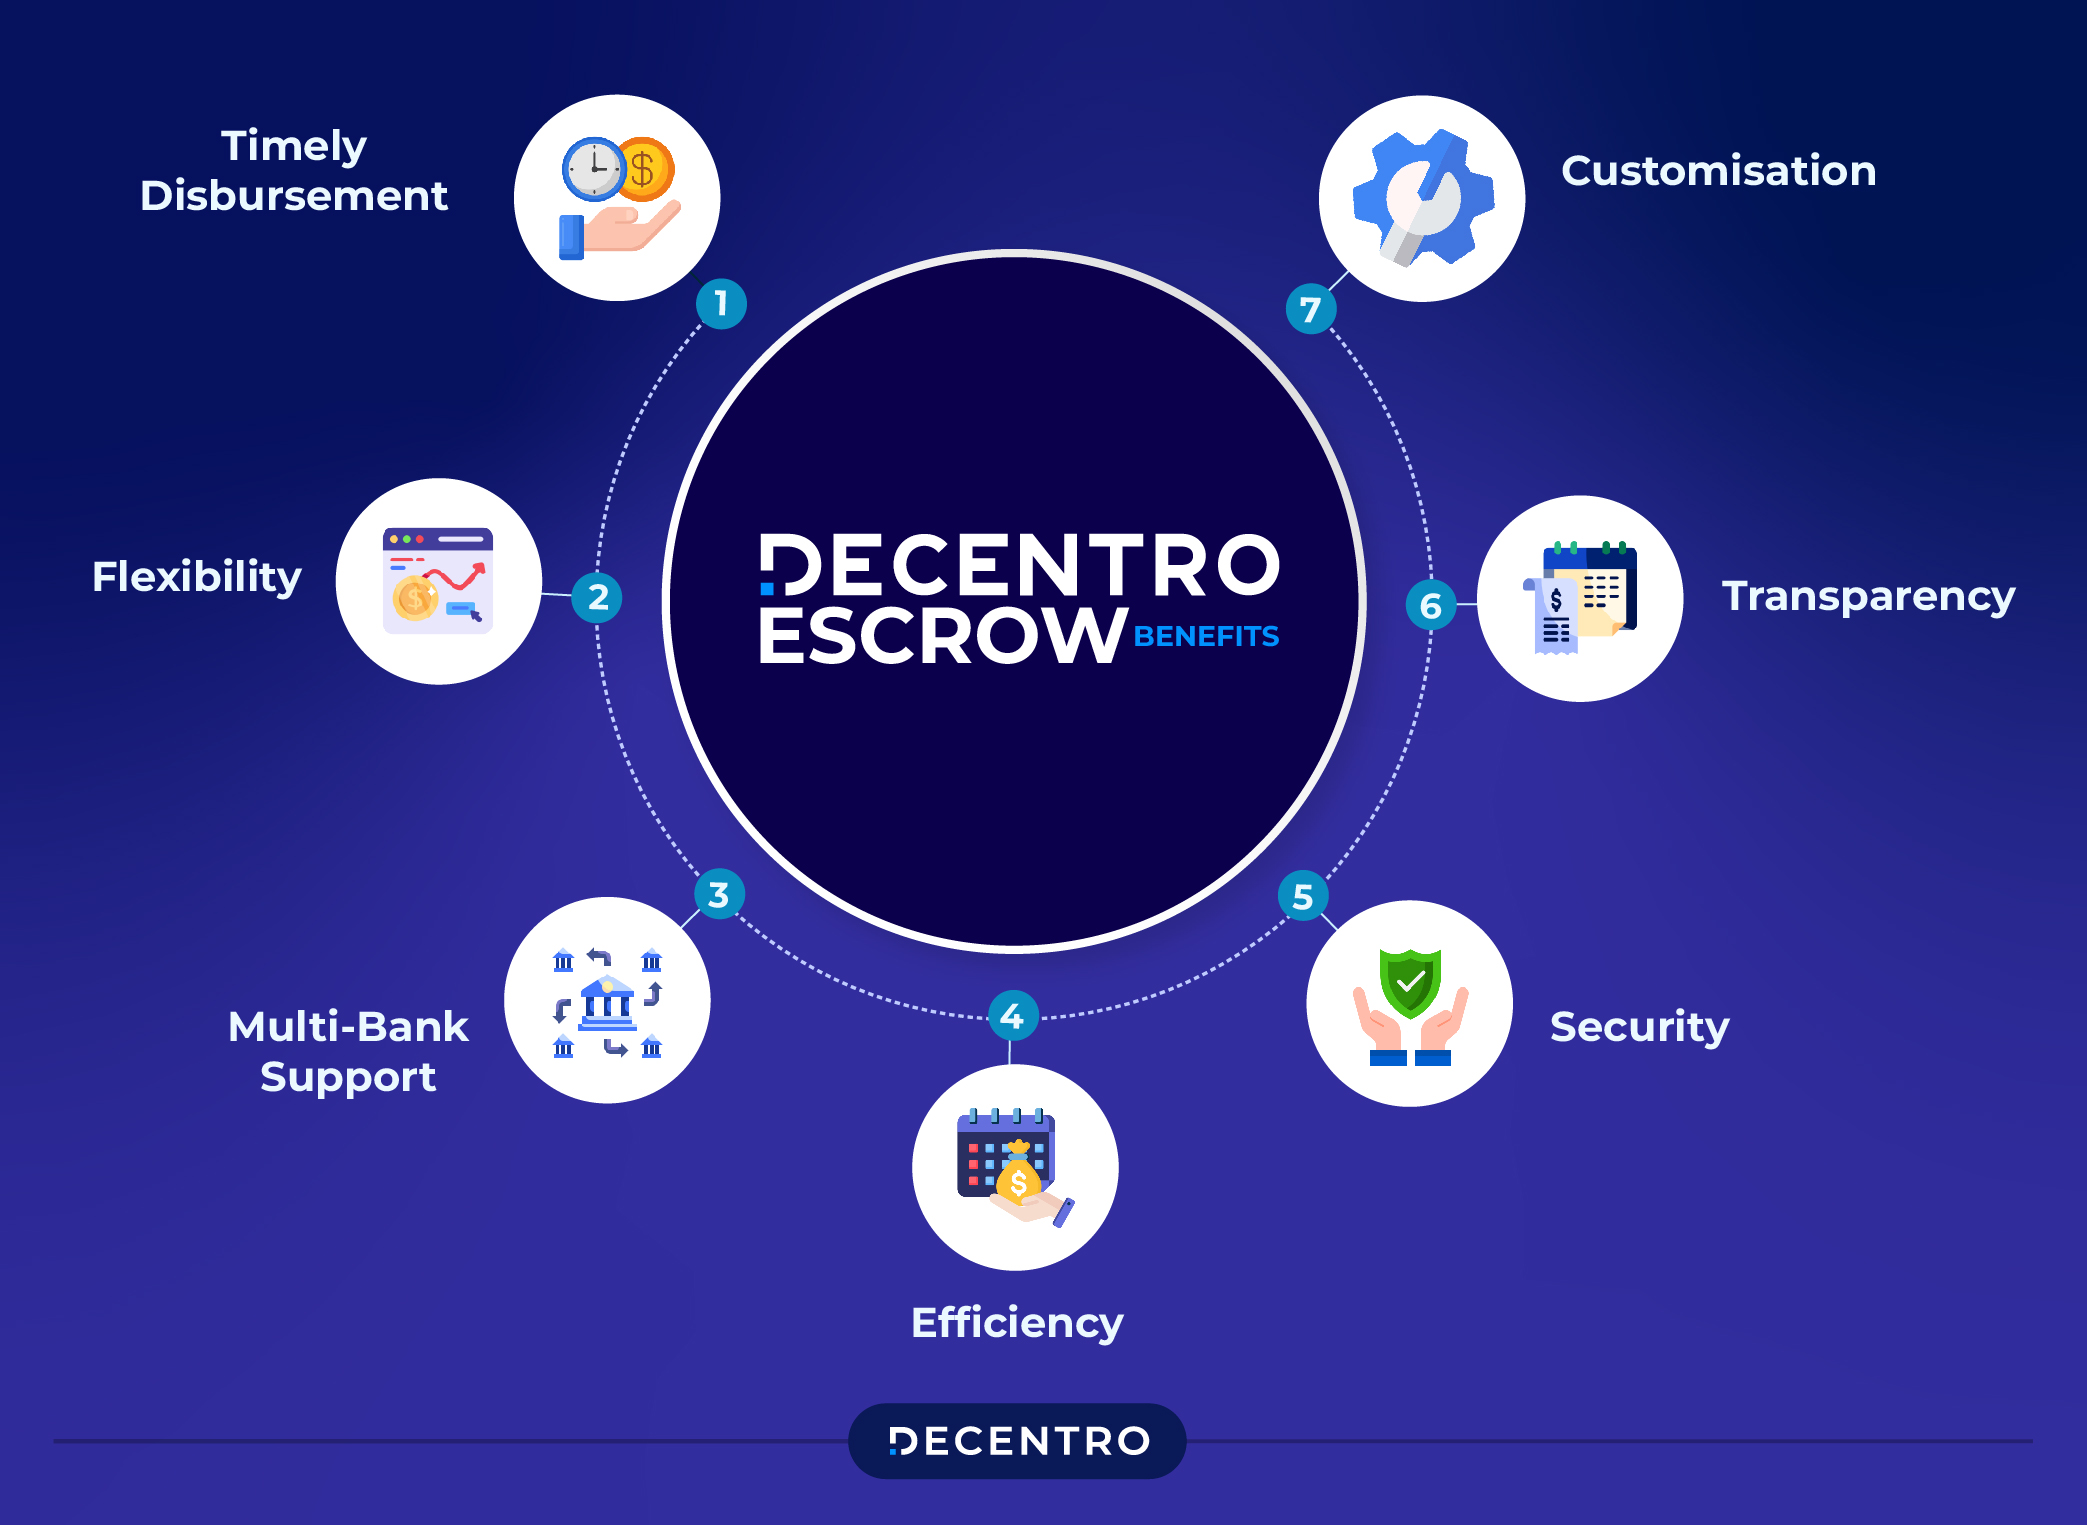 Decentro's Escrow benefits